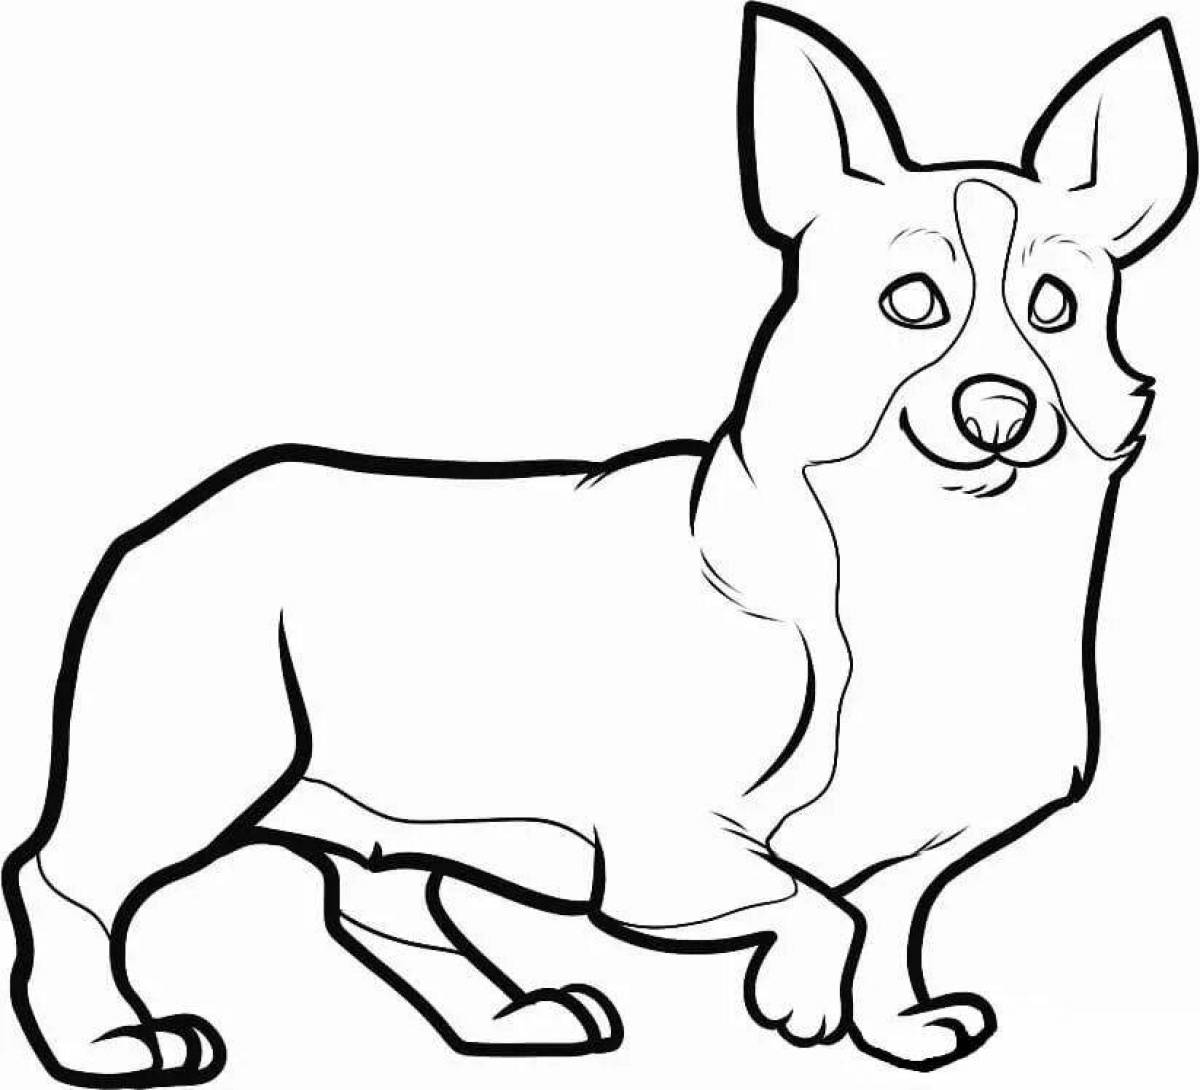 Naughty corgi puppy coloring page